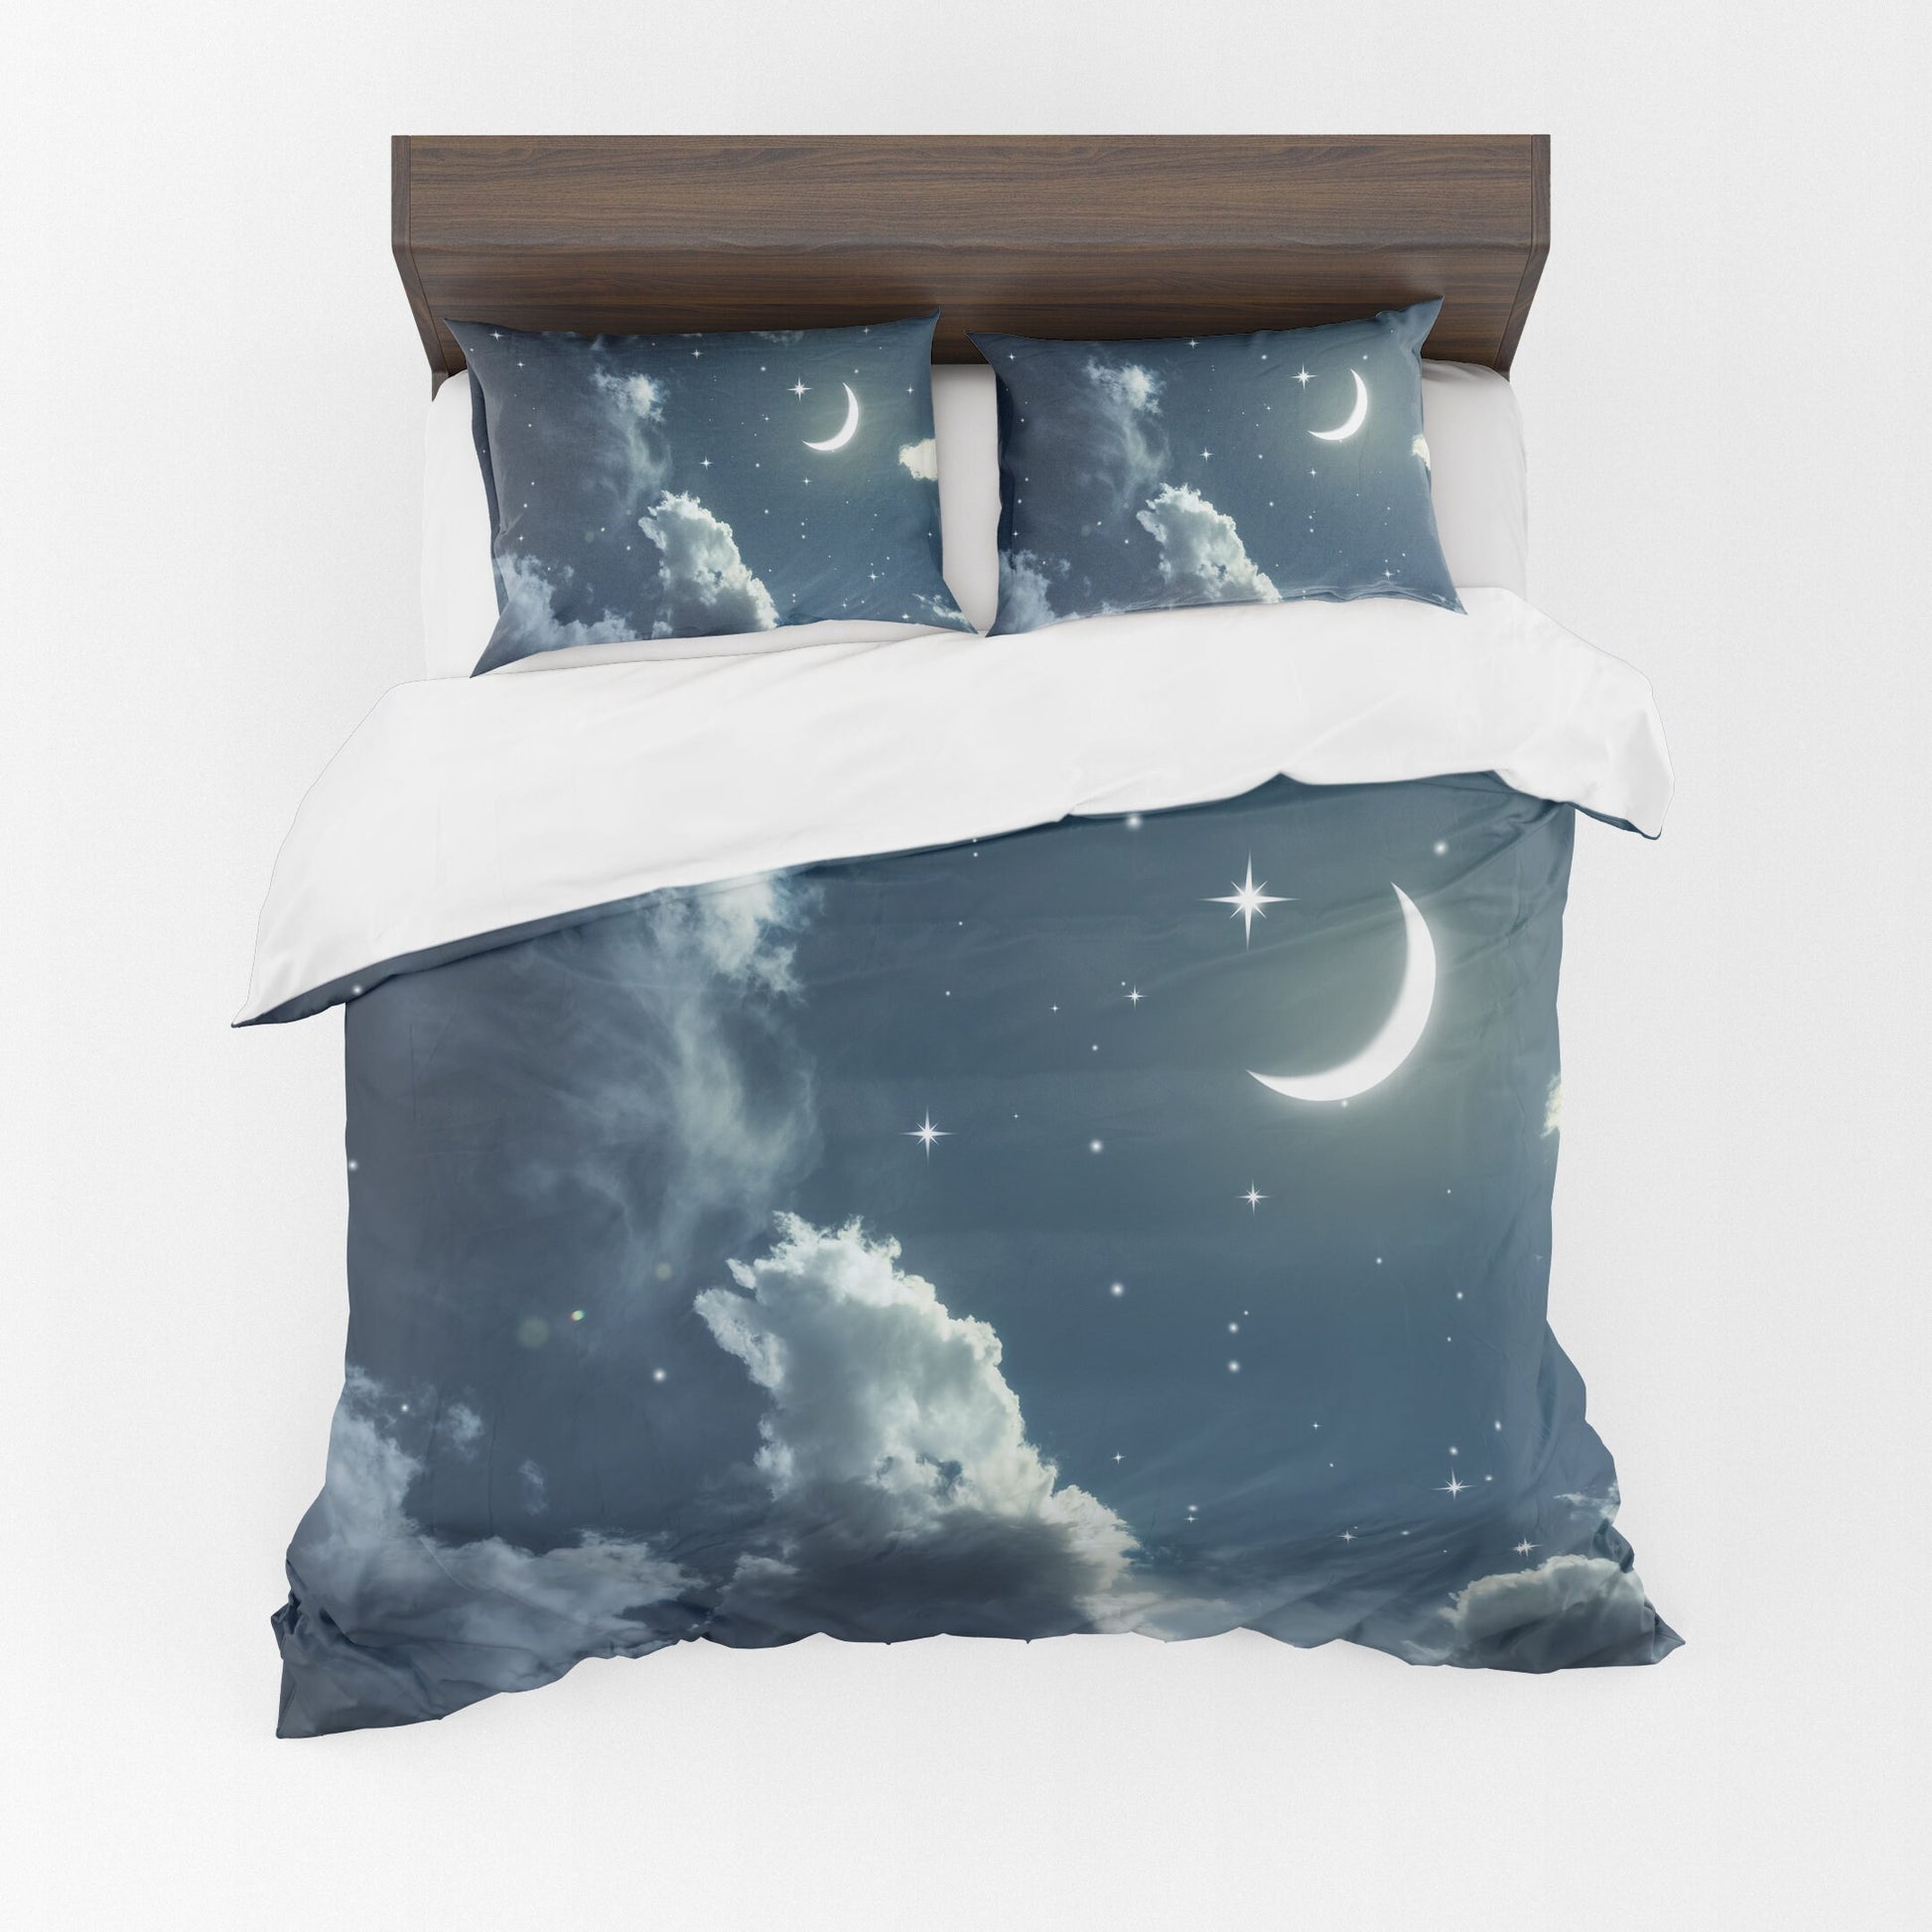 Nights Sky Comforter or Duvet Cover blue bedding moon bedding clouds comforter stars duvet blue comforter moon bedroom decor moon comforter